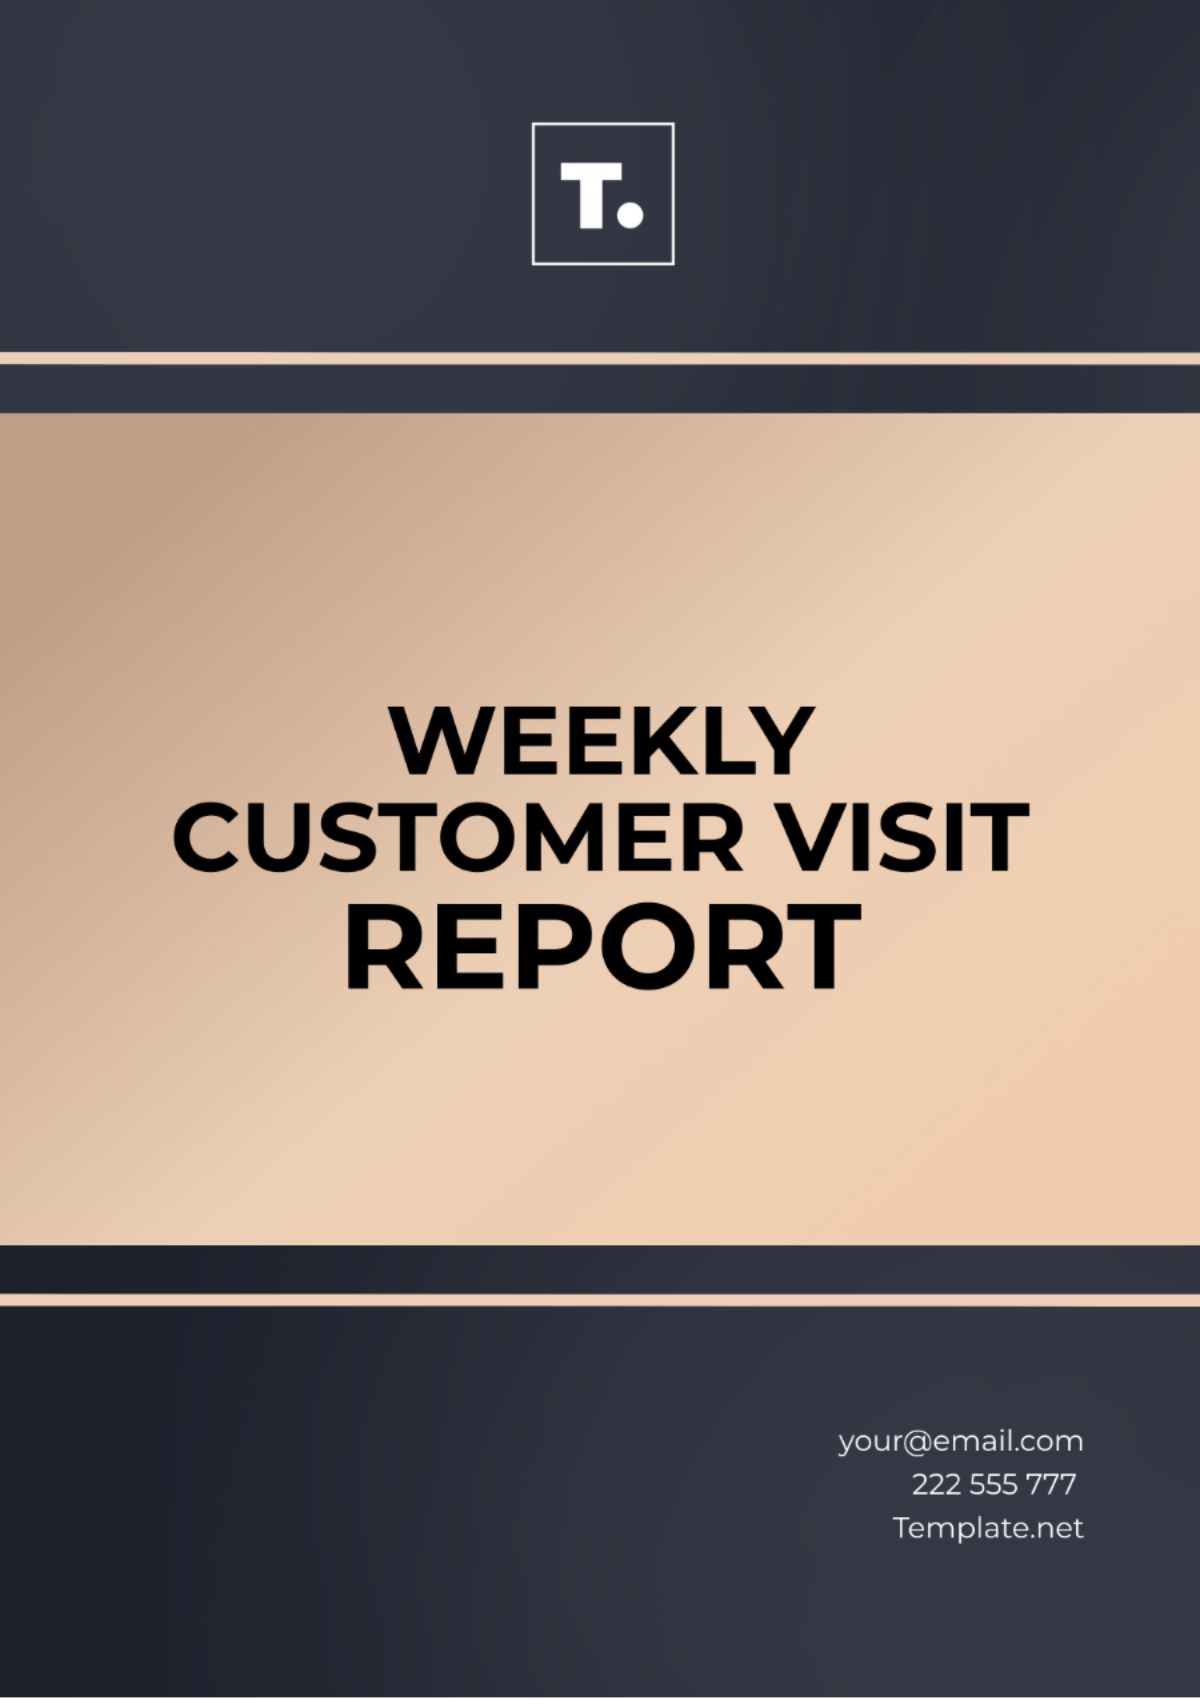 Weekly Customer Visit Report Template